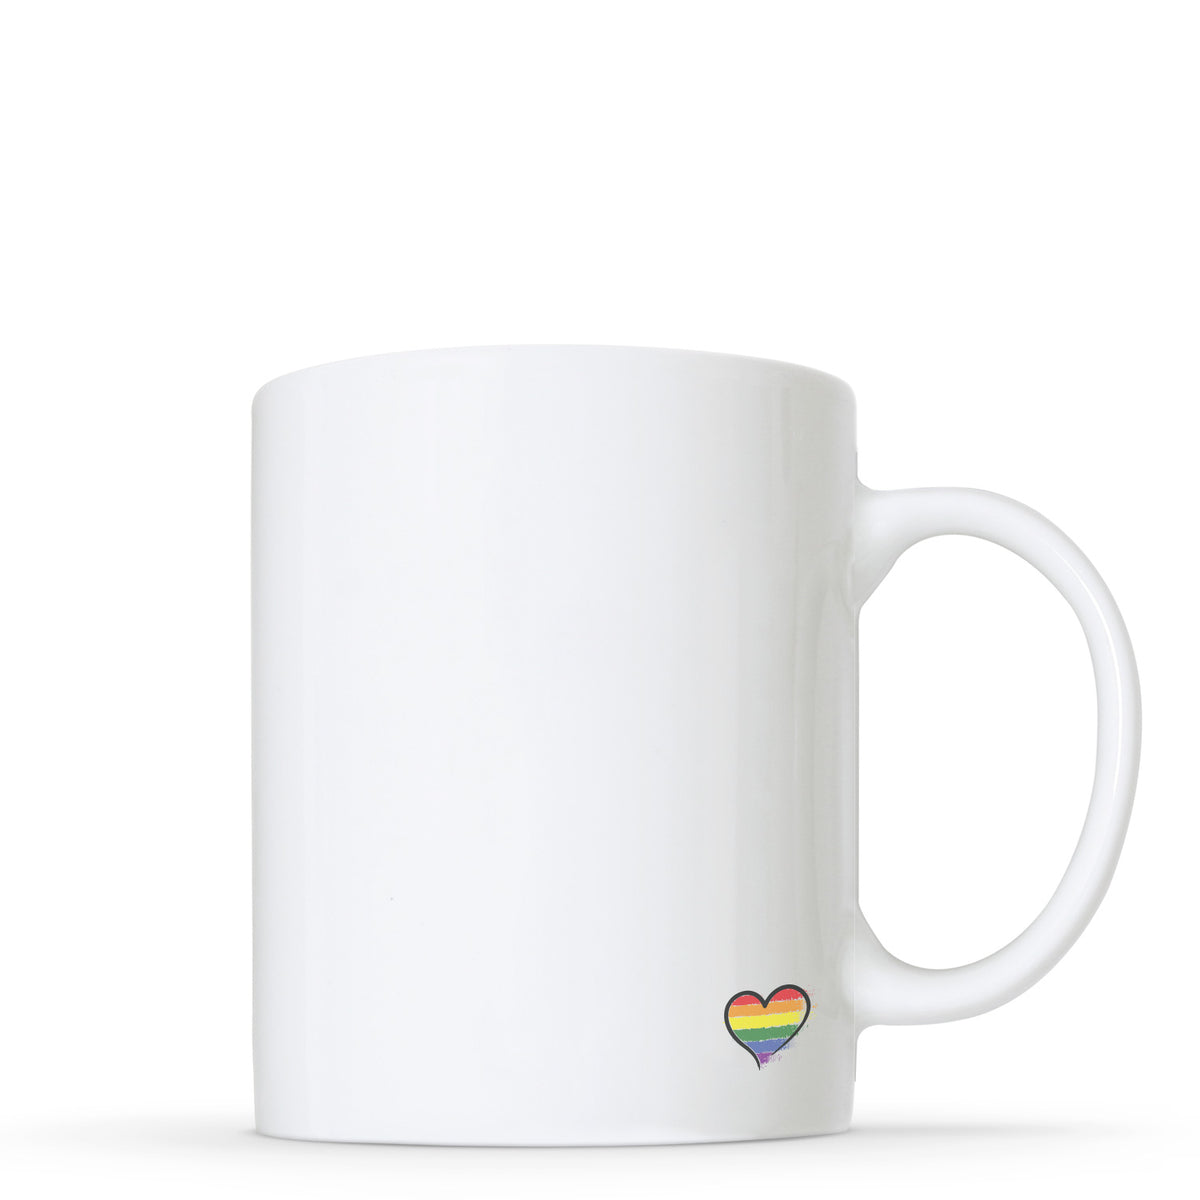 Stay You - Lesbian Flag Heart Shape Mug | Gift